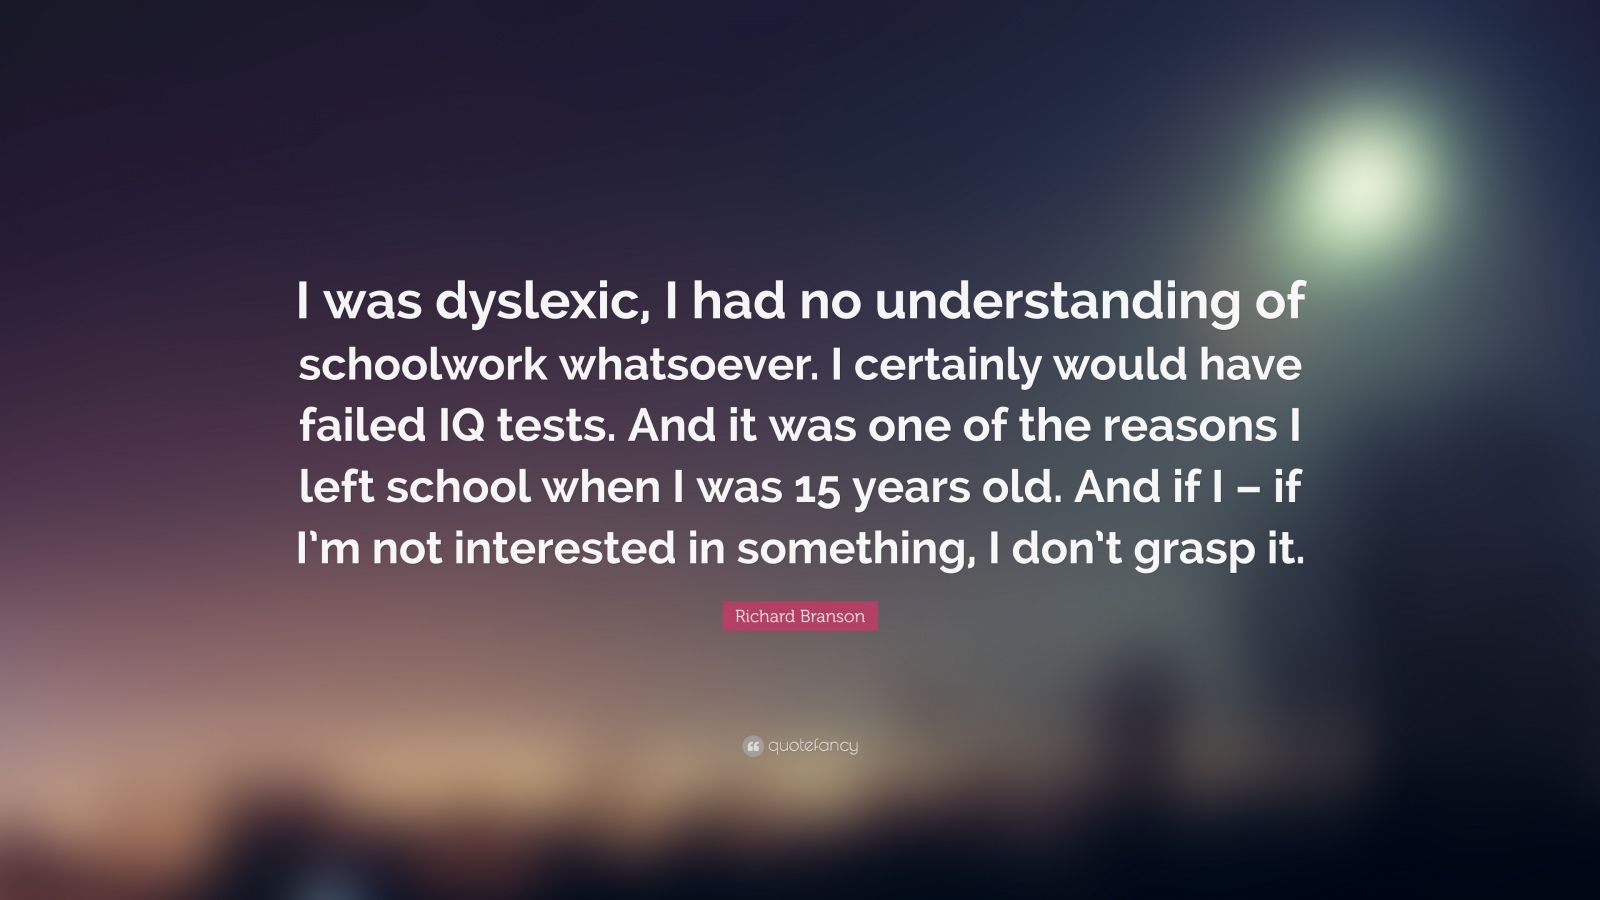 Richard Branson Quote: "I was dyslexic, I had no ...